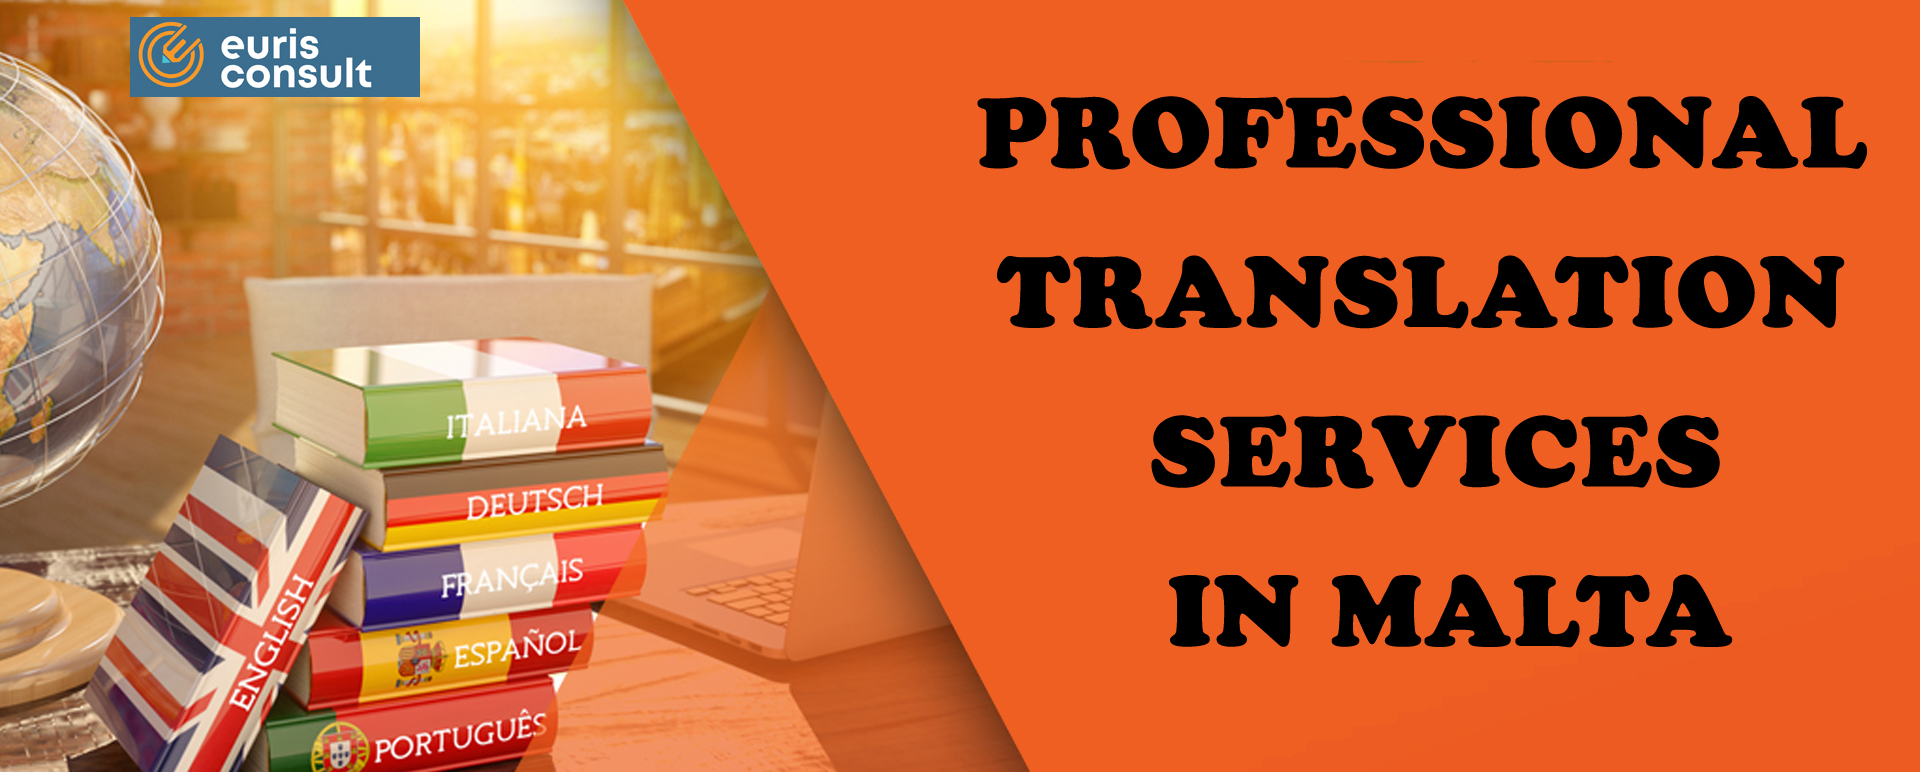 Professional Translation Services in Malta